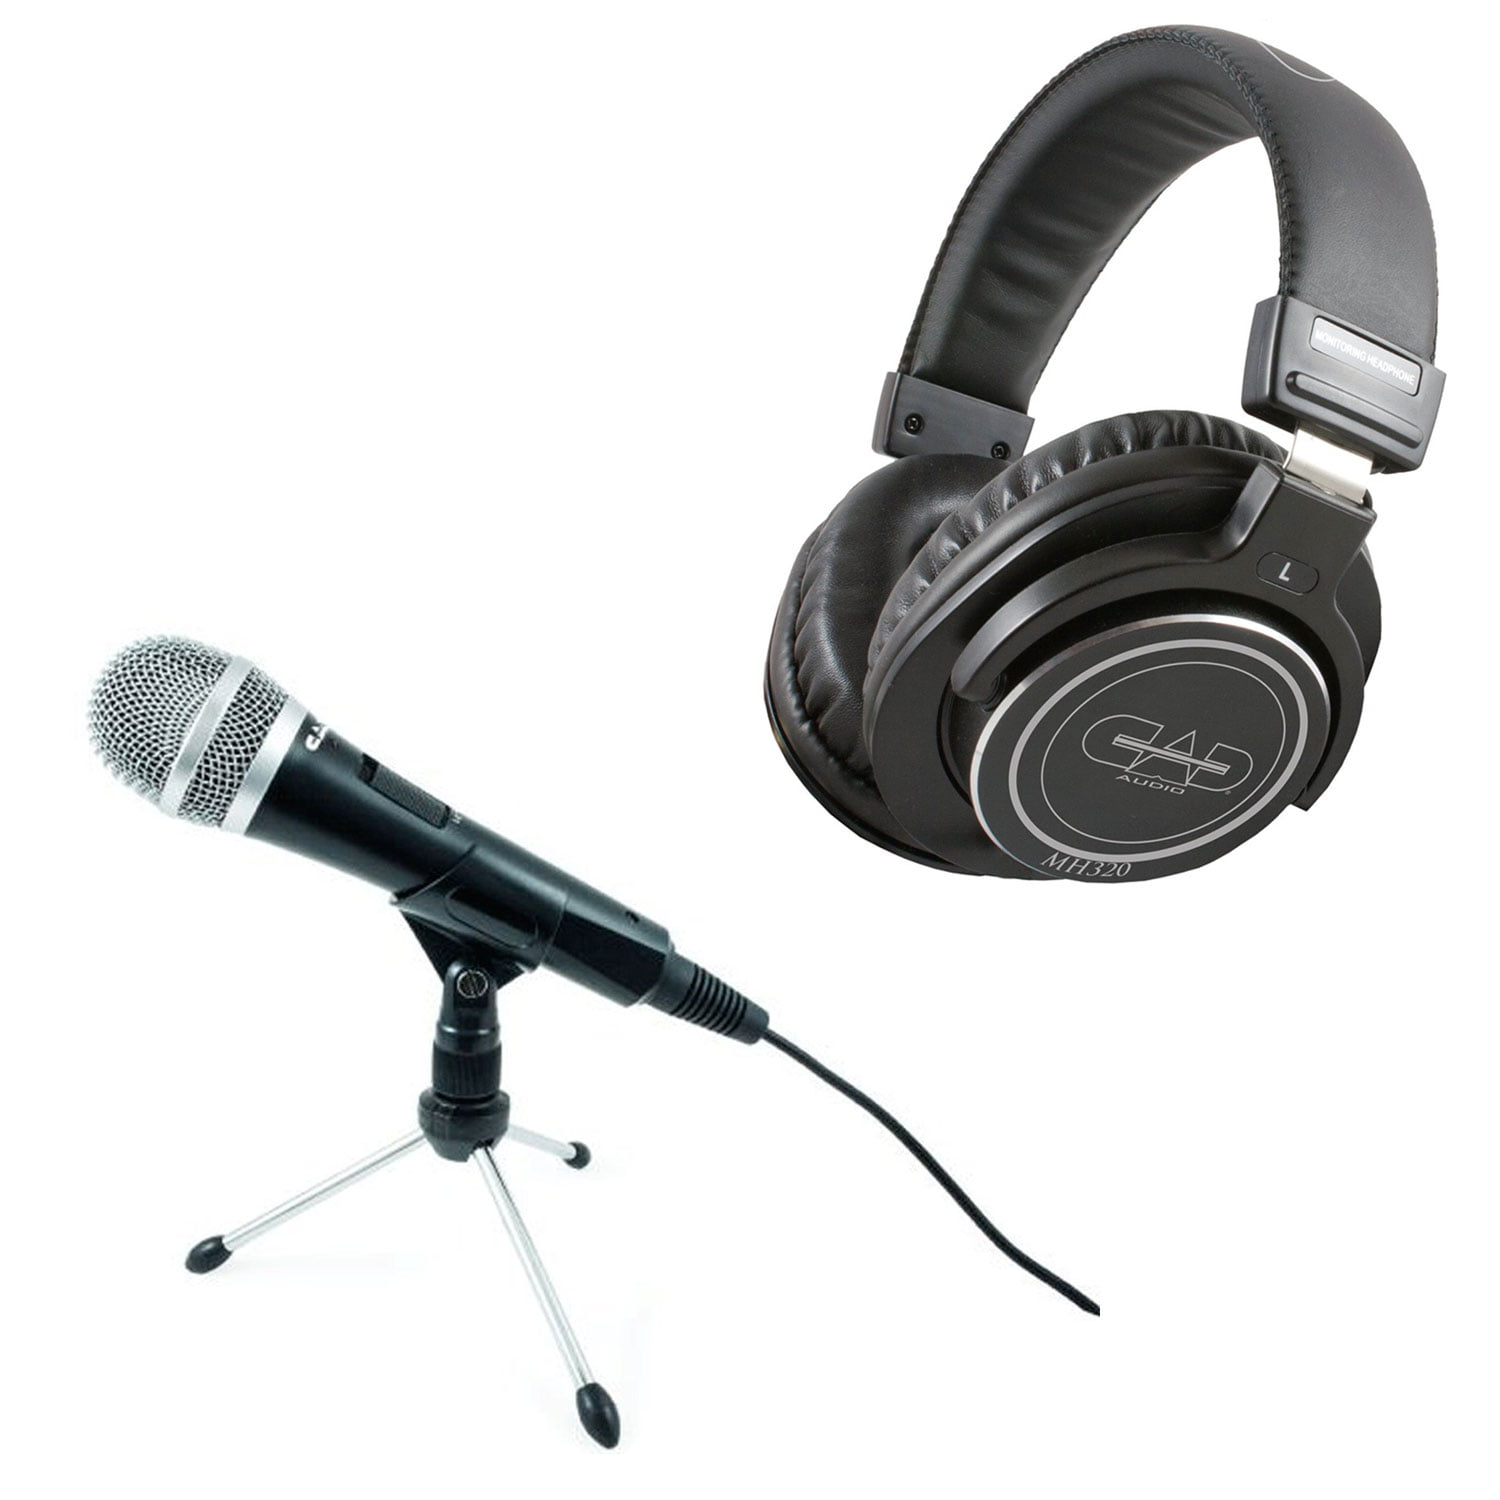 Foam Top Value CAD Accessory Bundle! CAD U1 USB Dynamic Recording Microphone 4-Inch Pop Filter 